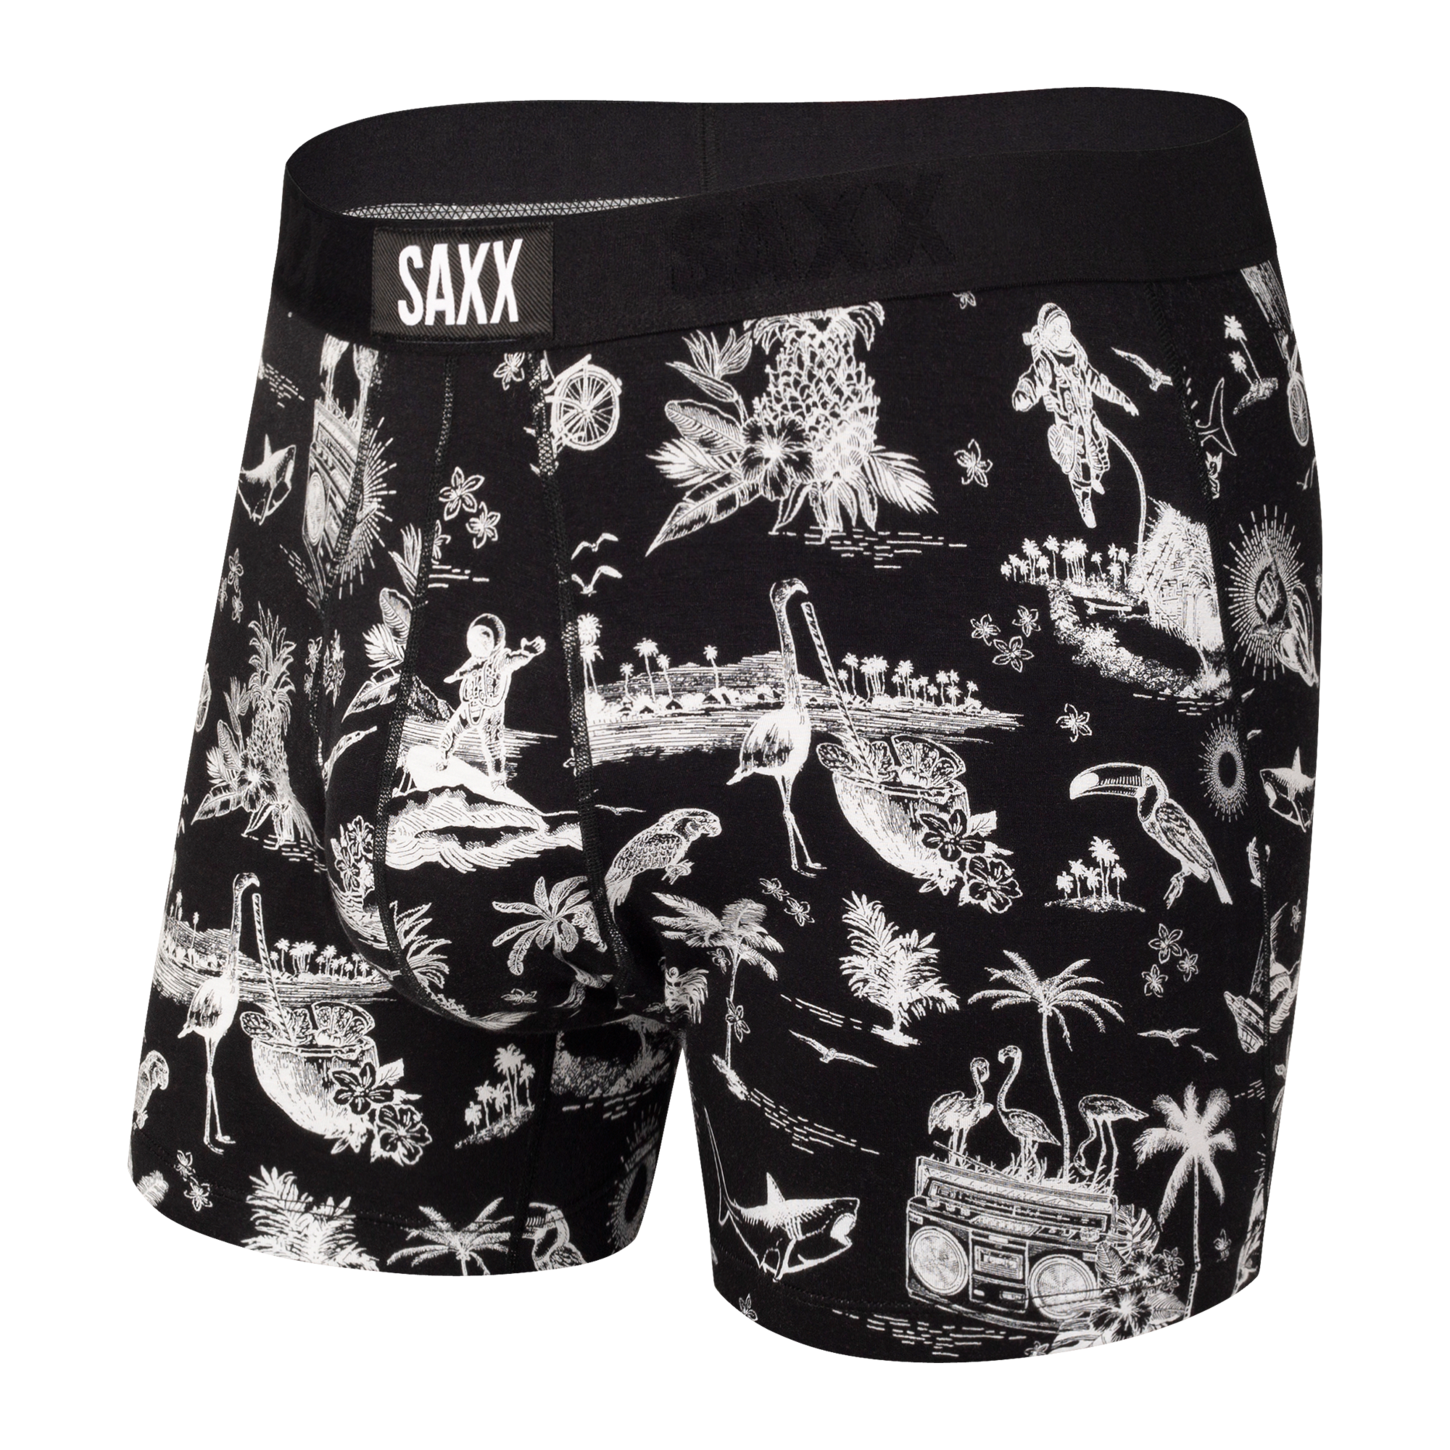 NDS Wear Talk Dirty to Me Saxophone Mens Boxer Brief Underwear